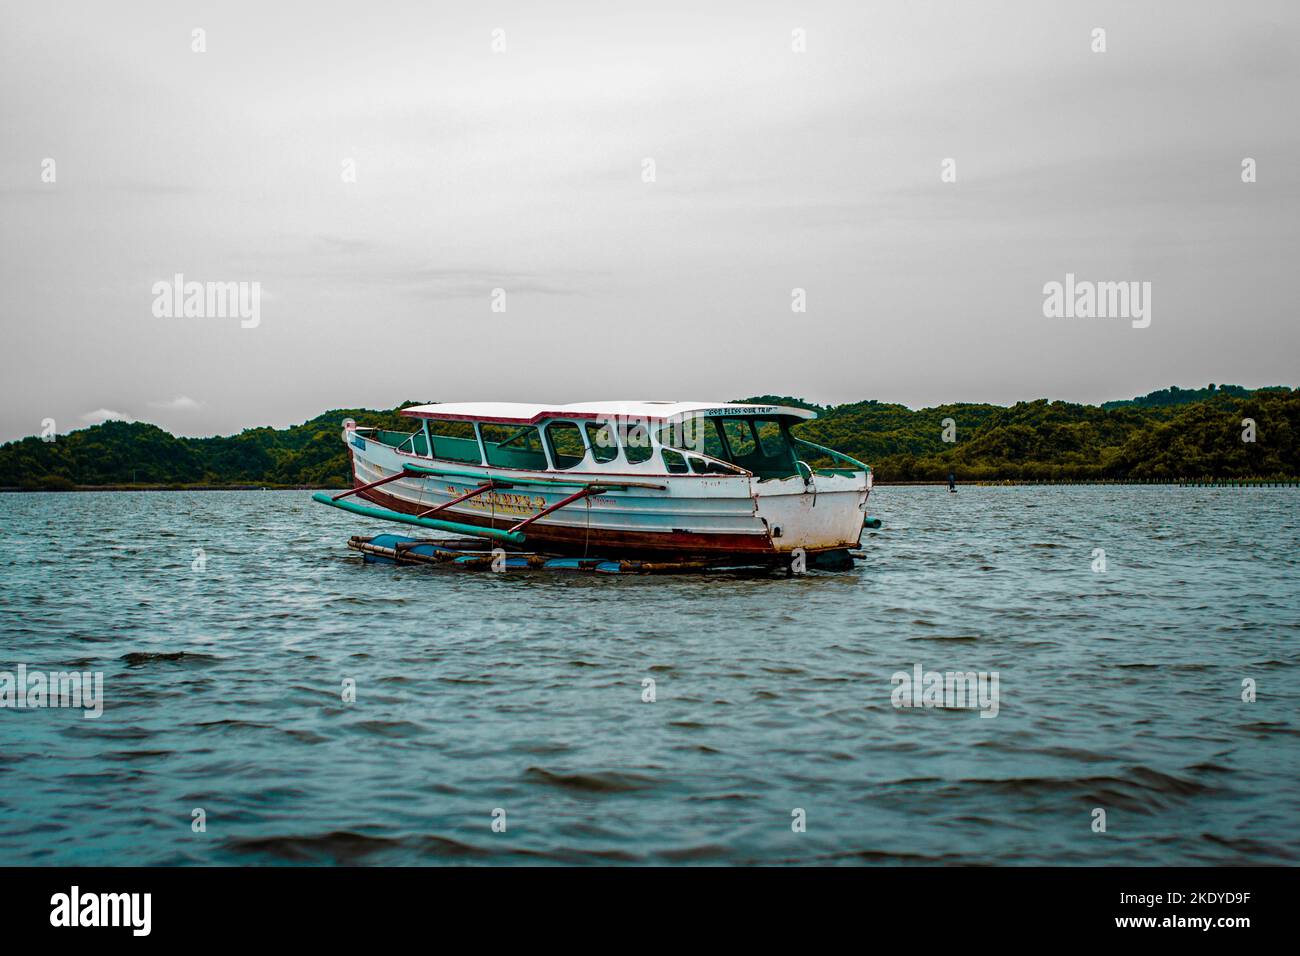 A long fishing boat sailing on the water near Zambales, Philippines Stock Photo